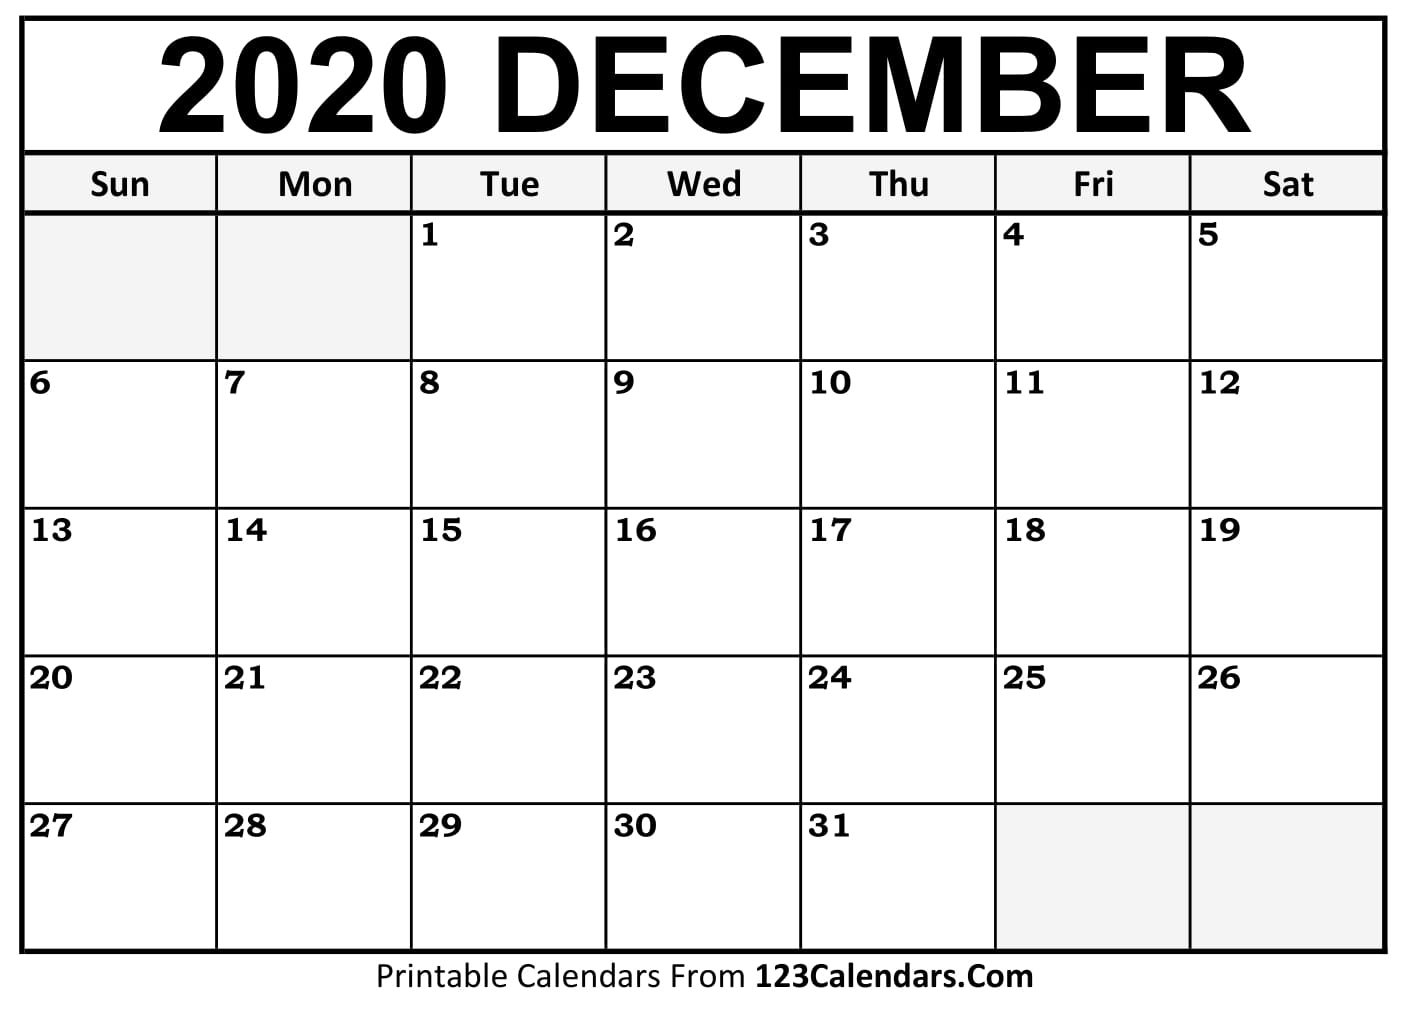 december-2020-printable-calendar-123calendars